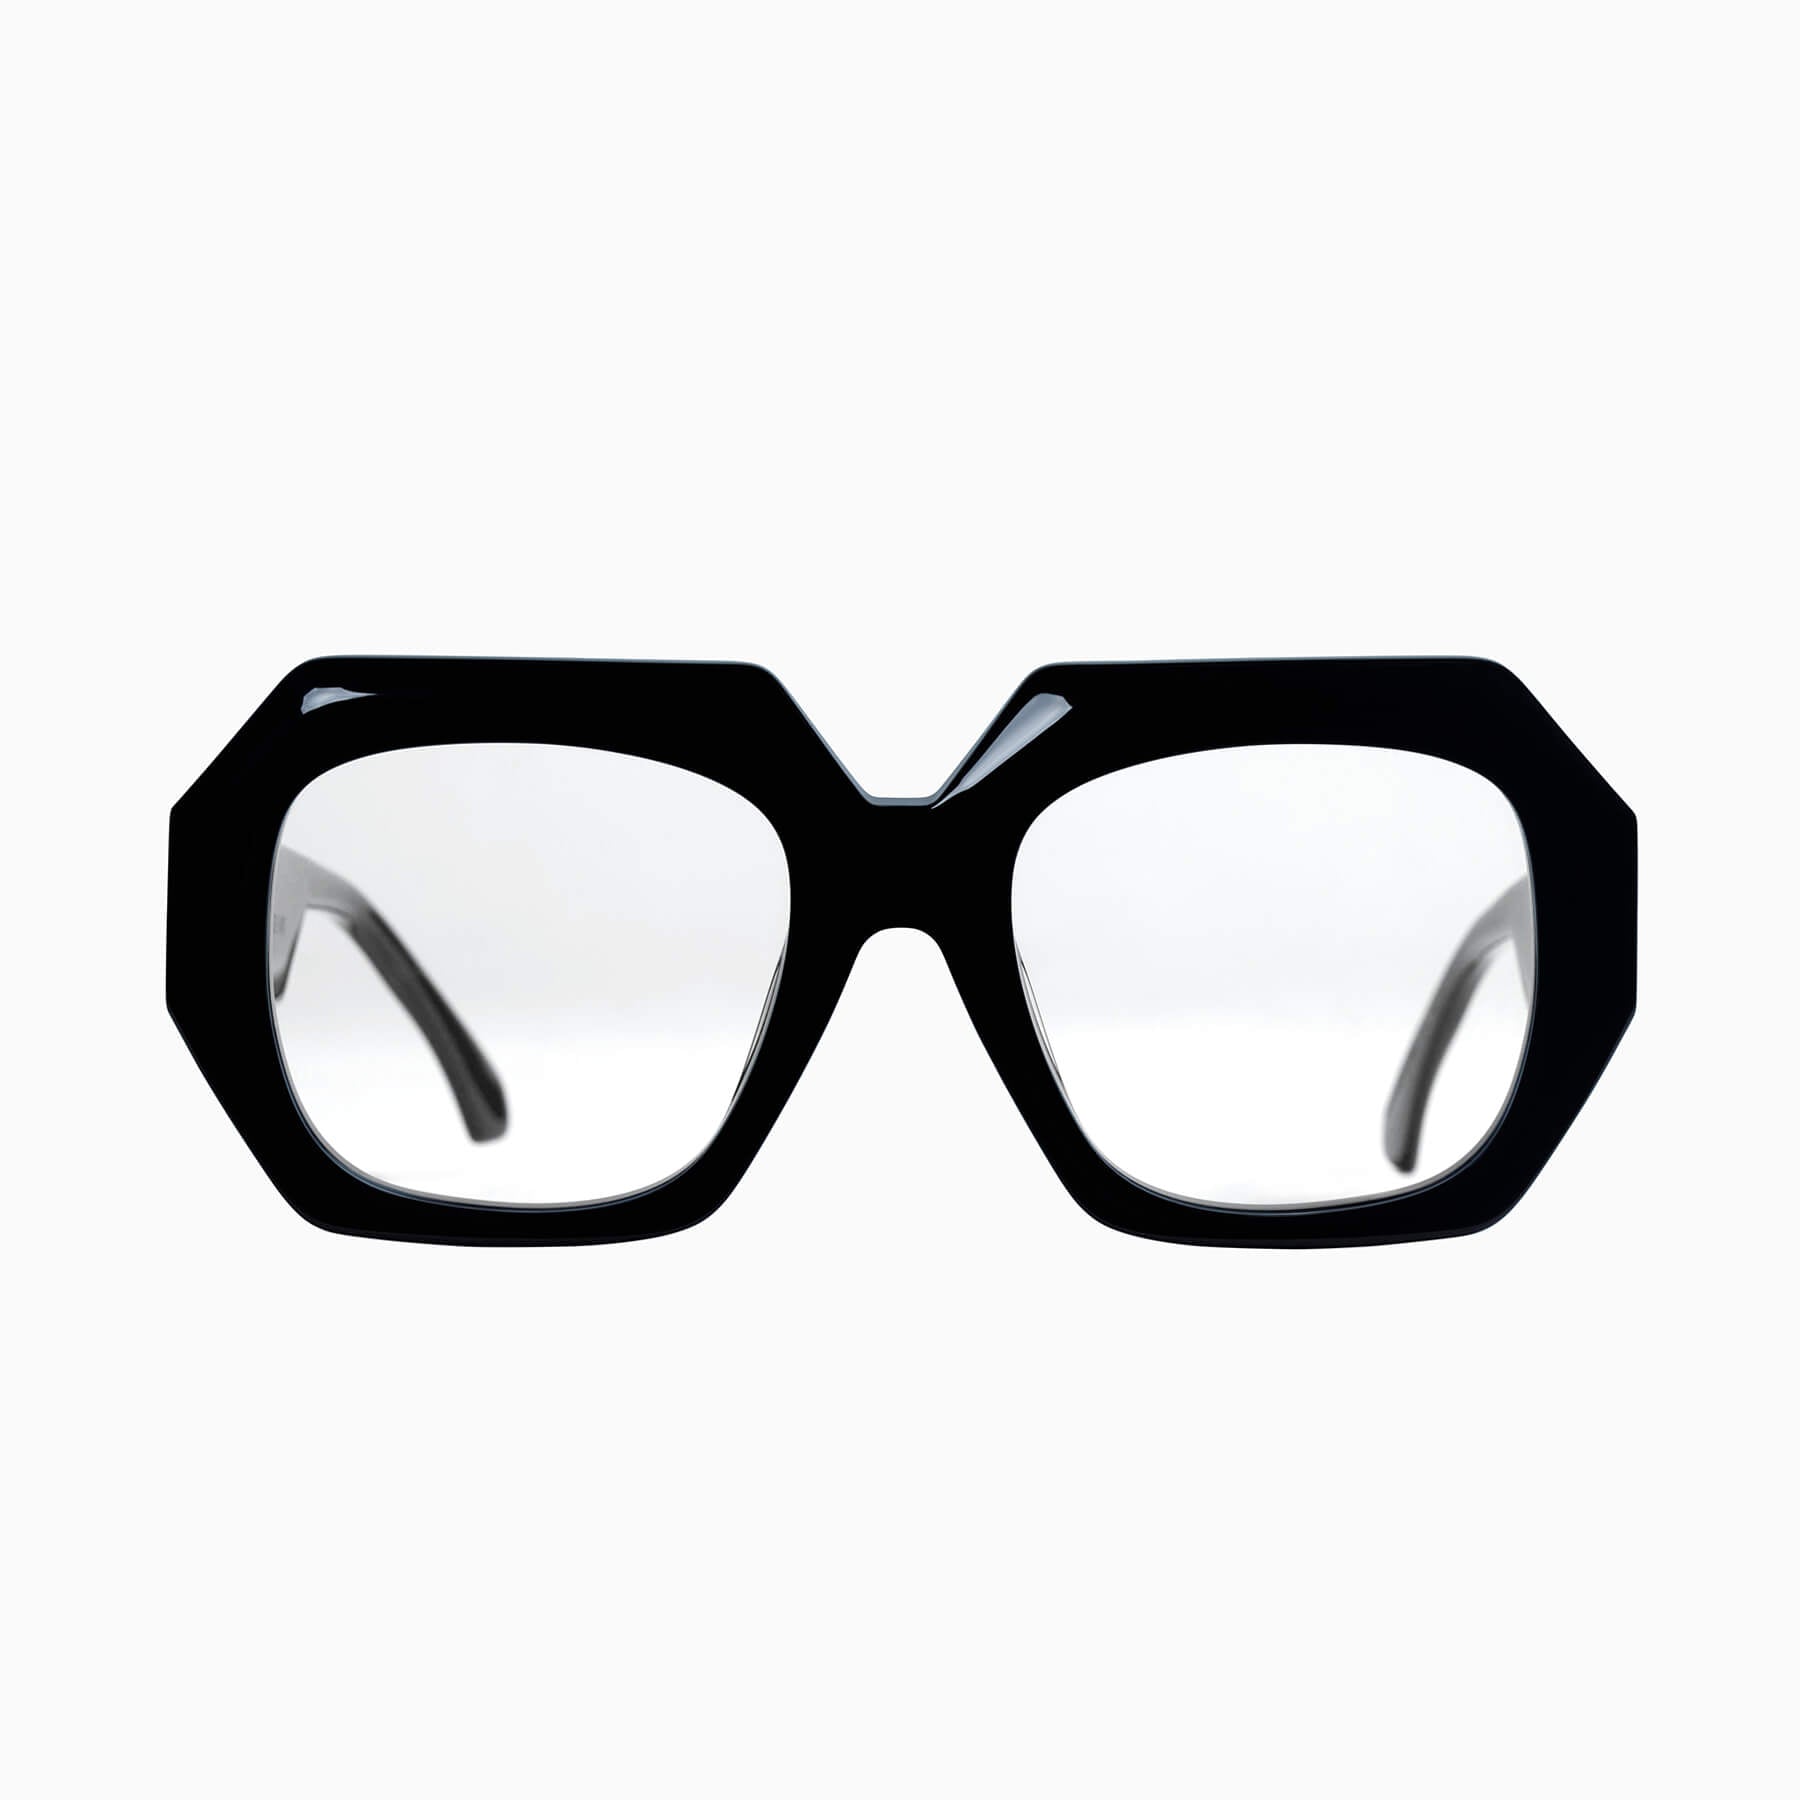 Louis Vuitton LV Edge Square Sunglasses Black Acetate & Metal. Size W